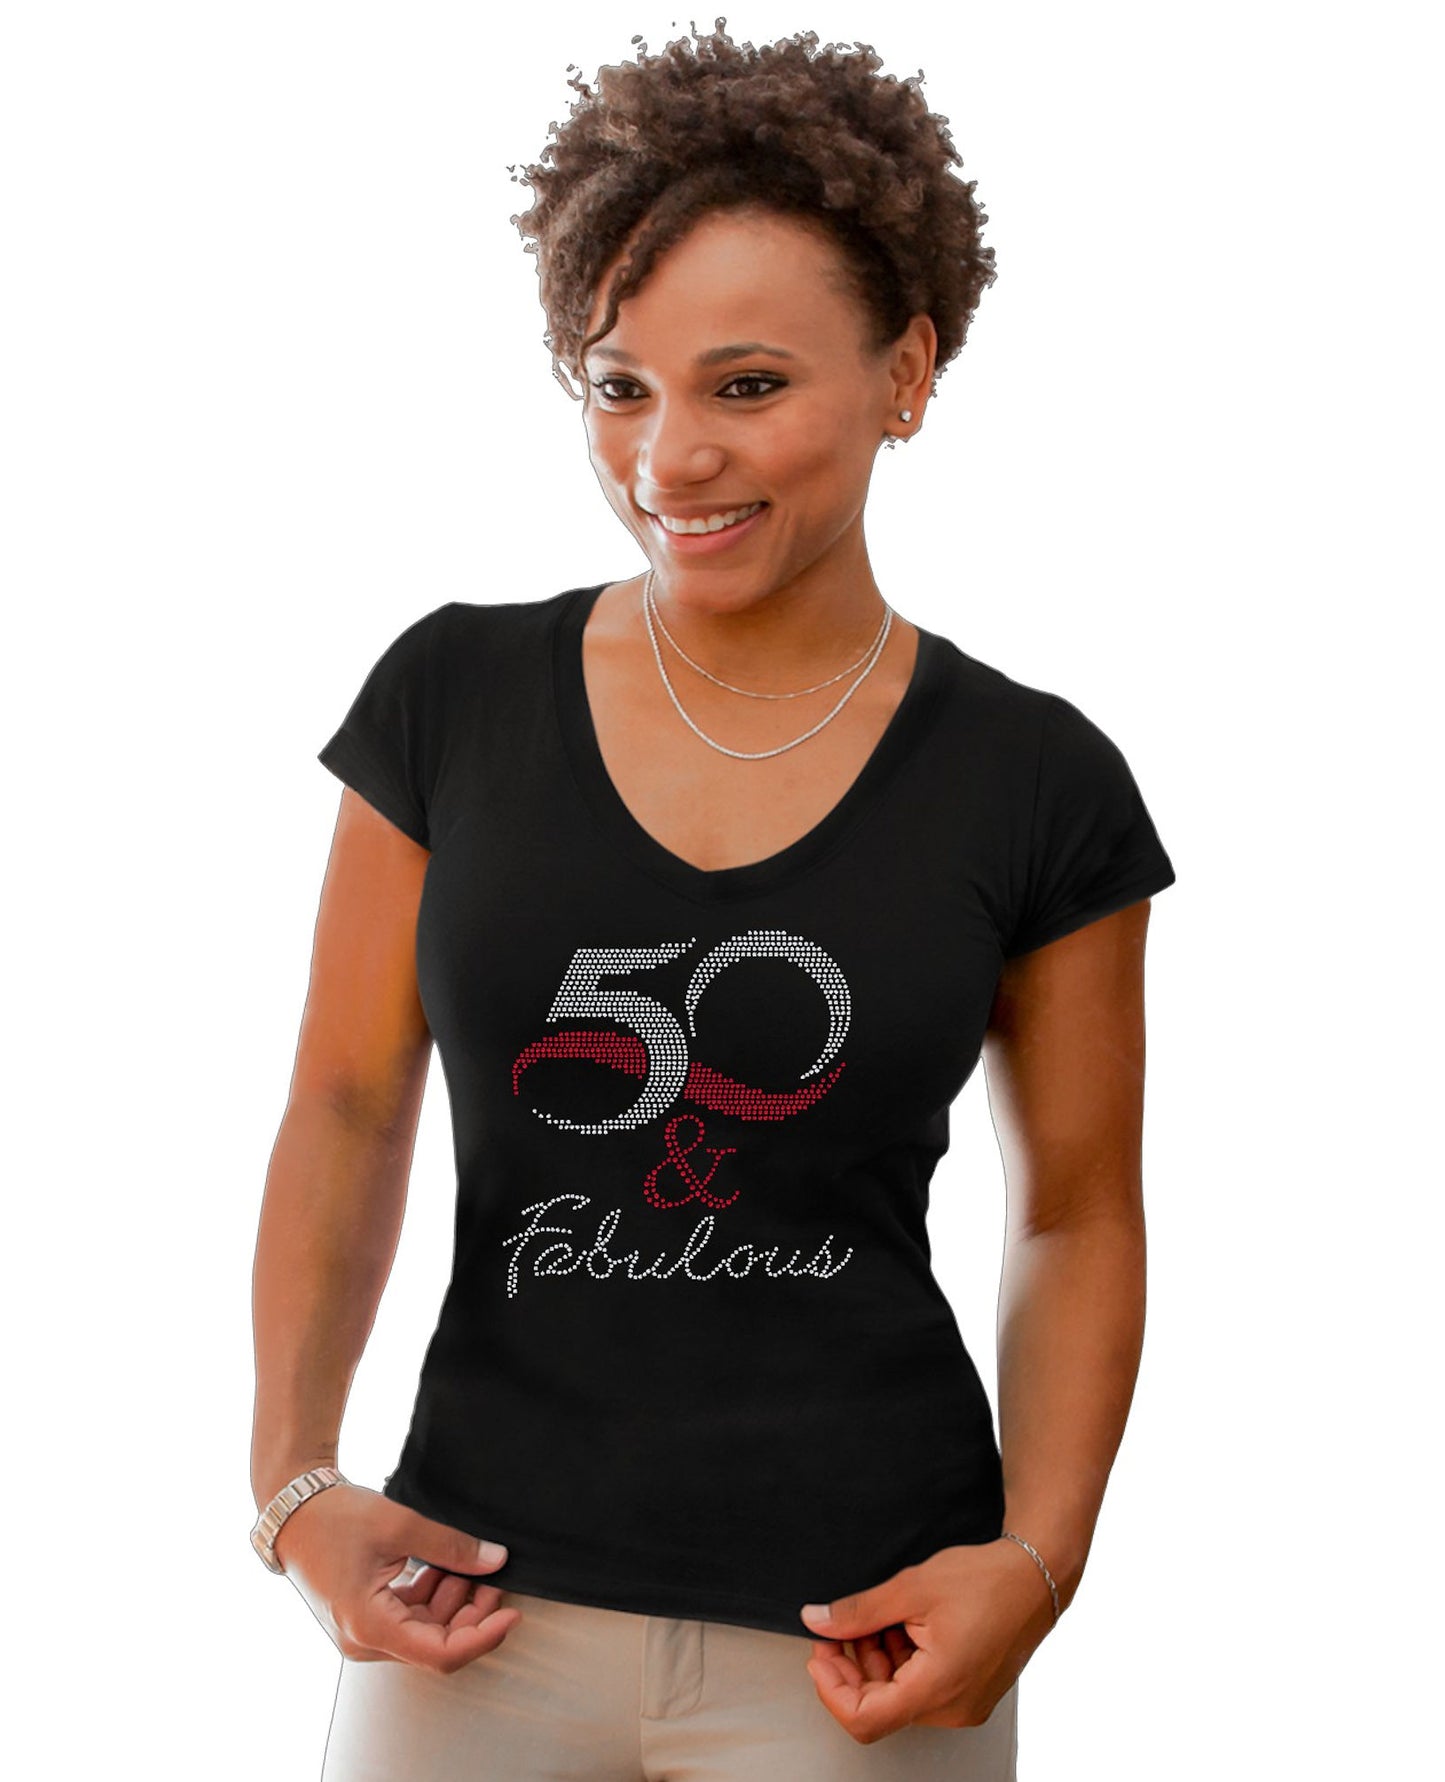 50 And Fabulous Rhinestone T-Shirt